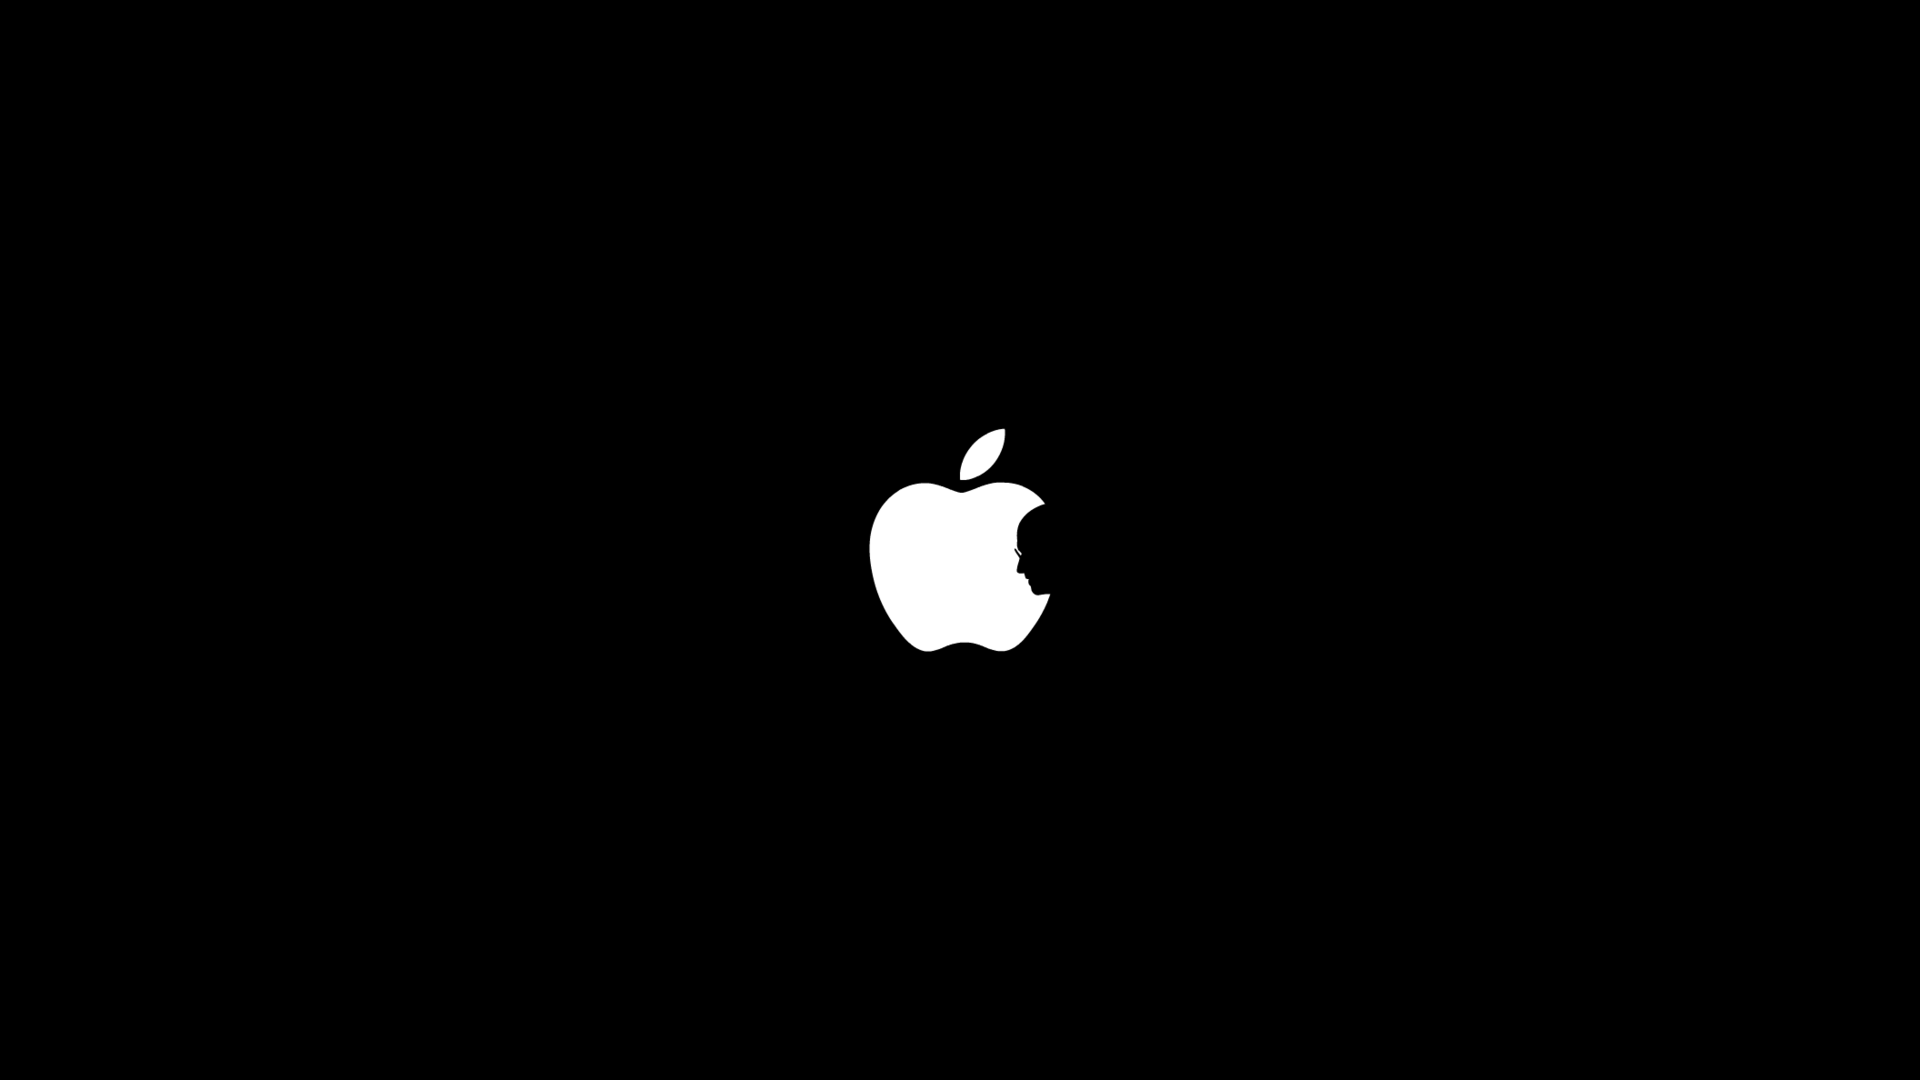 General 1920x1080 Apple Inc. minimalism logo thinking simple background Steve Jobs brand